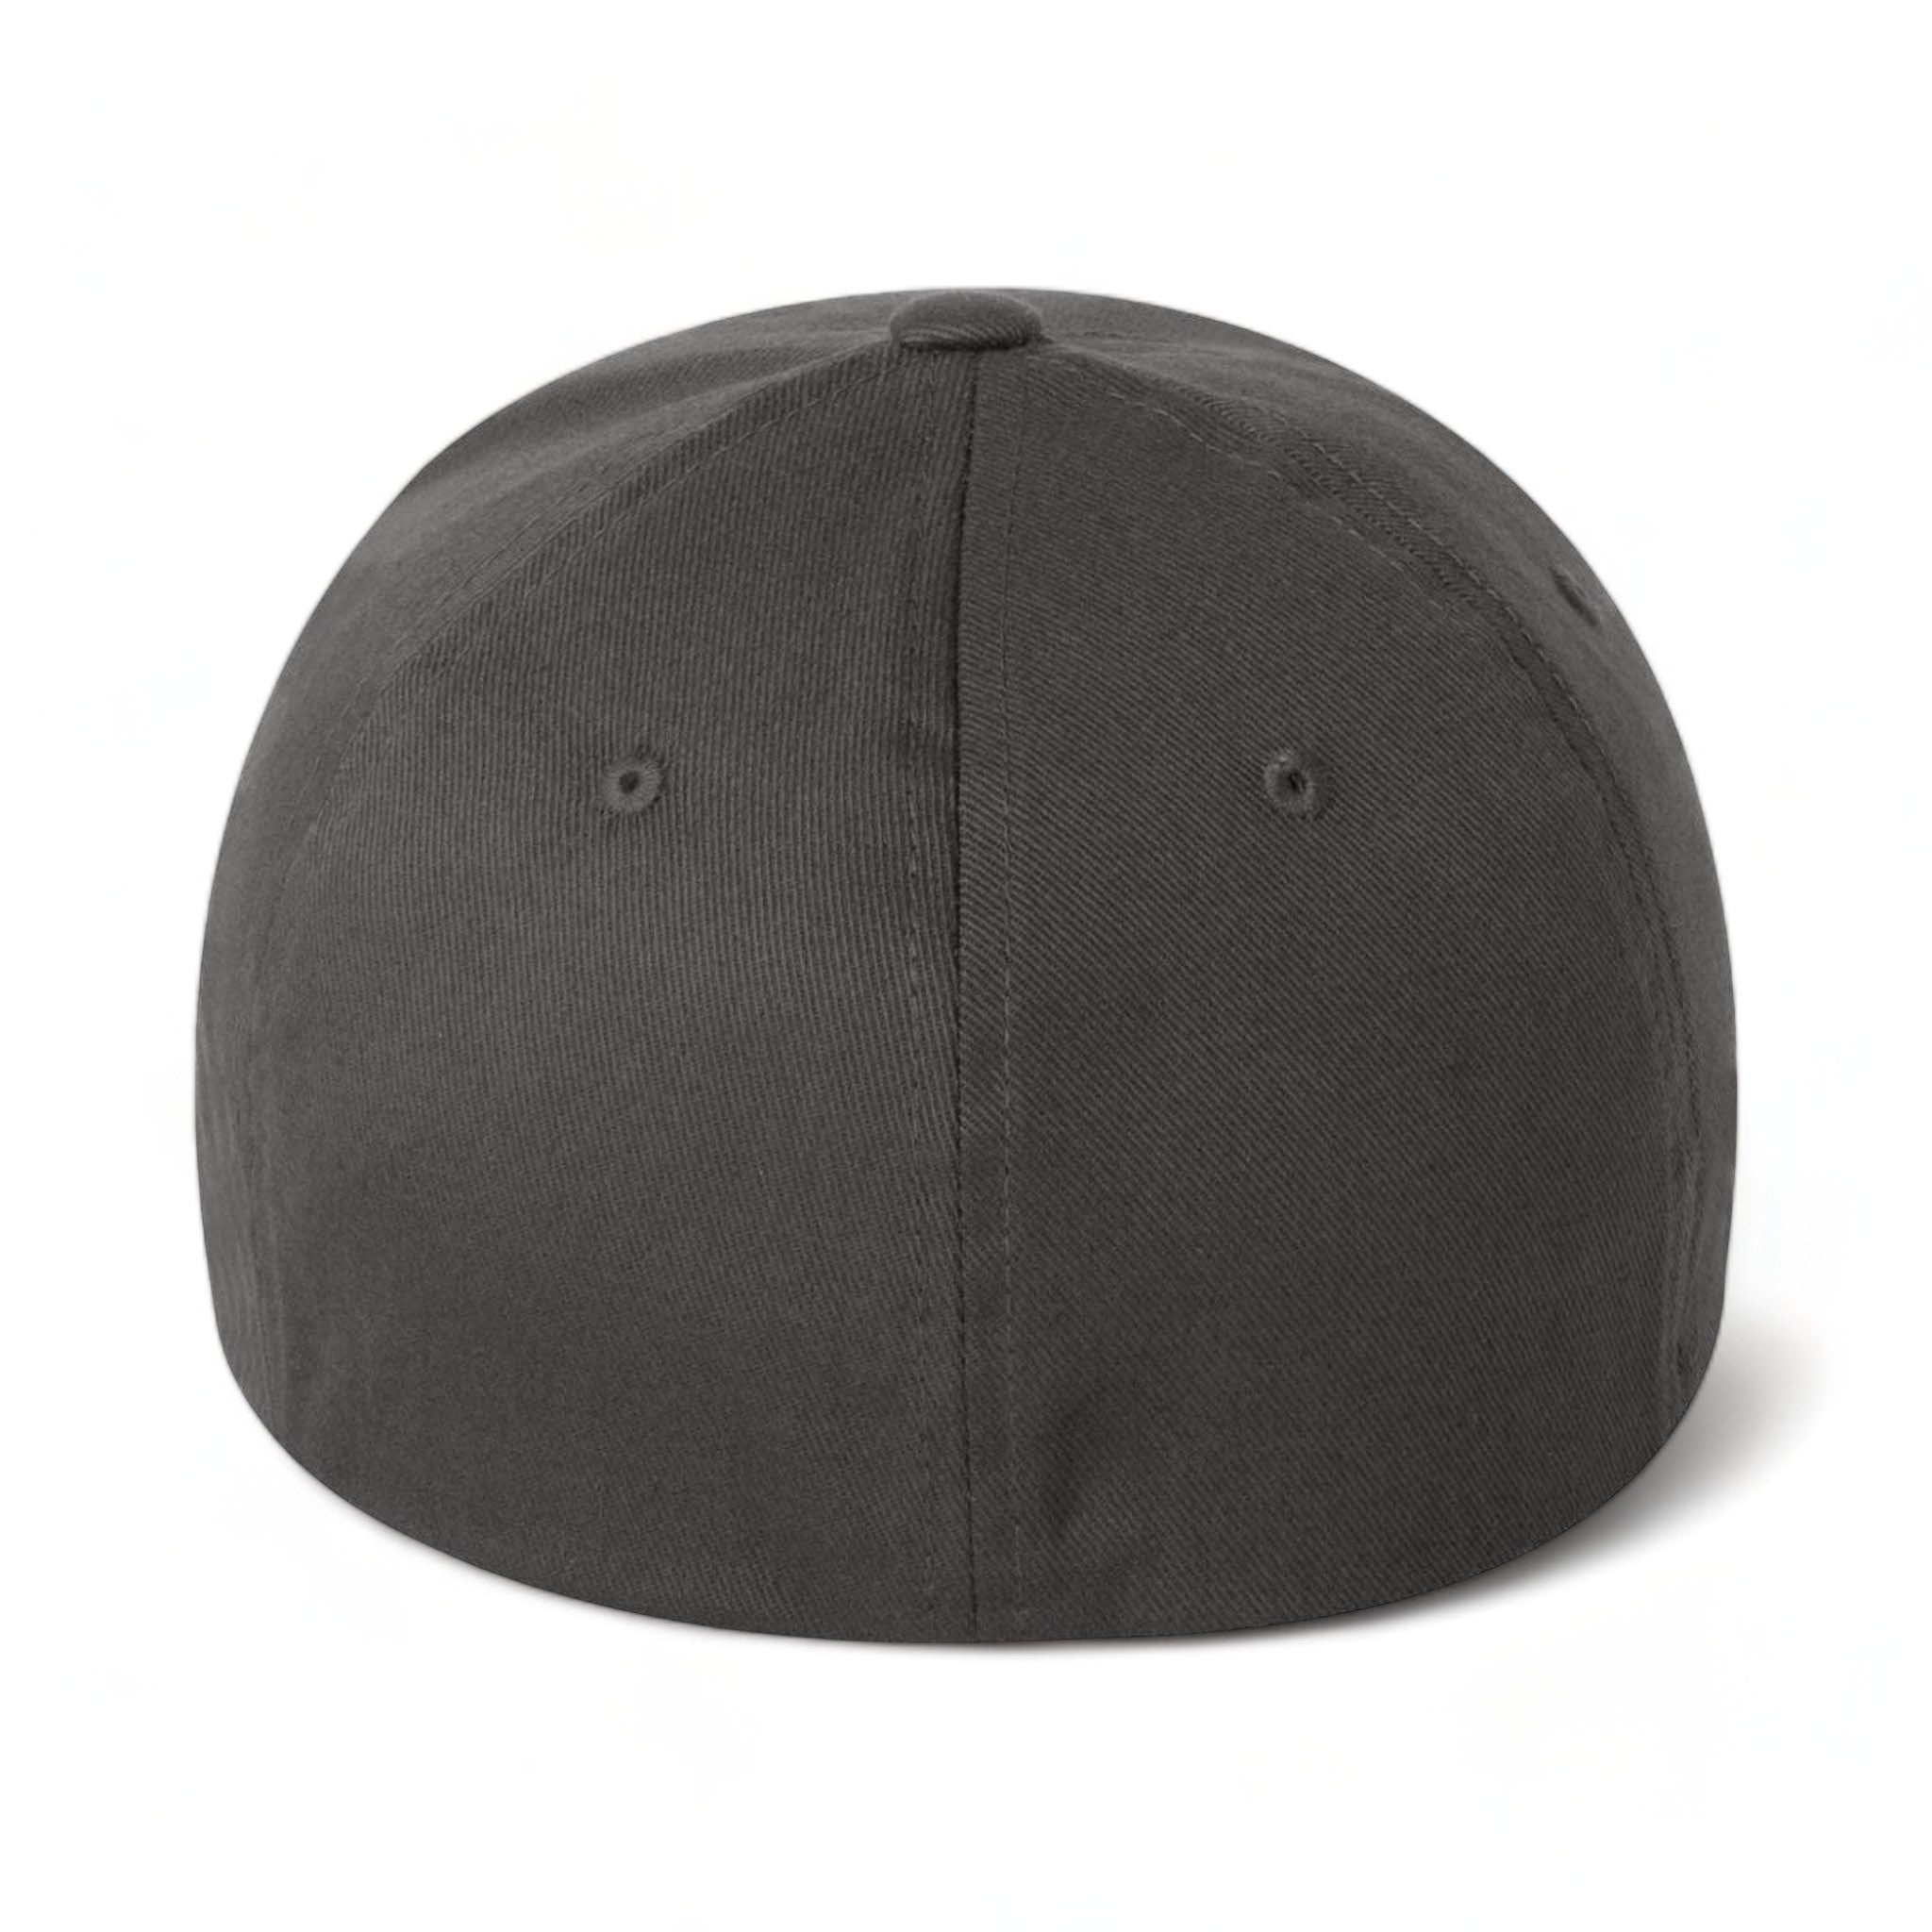 Back view of Flexfit 6277 custom hat in dark grey